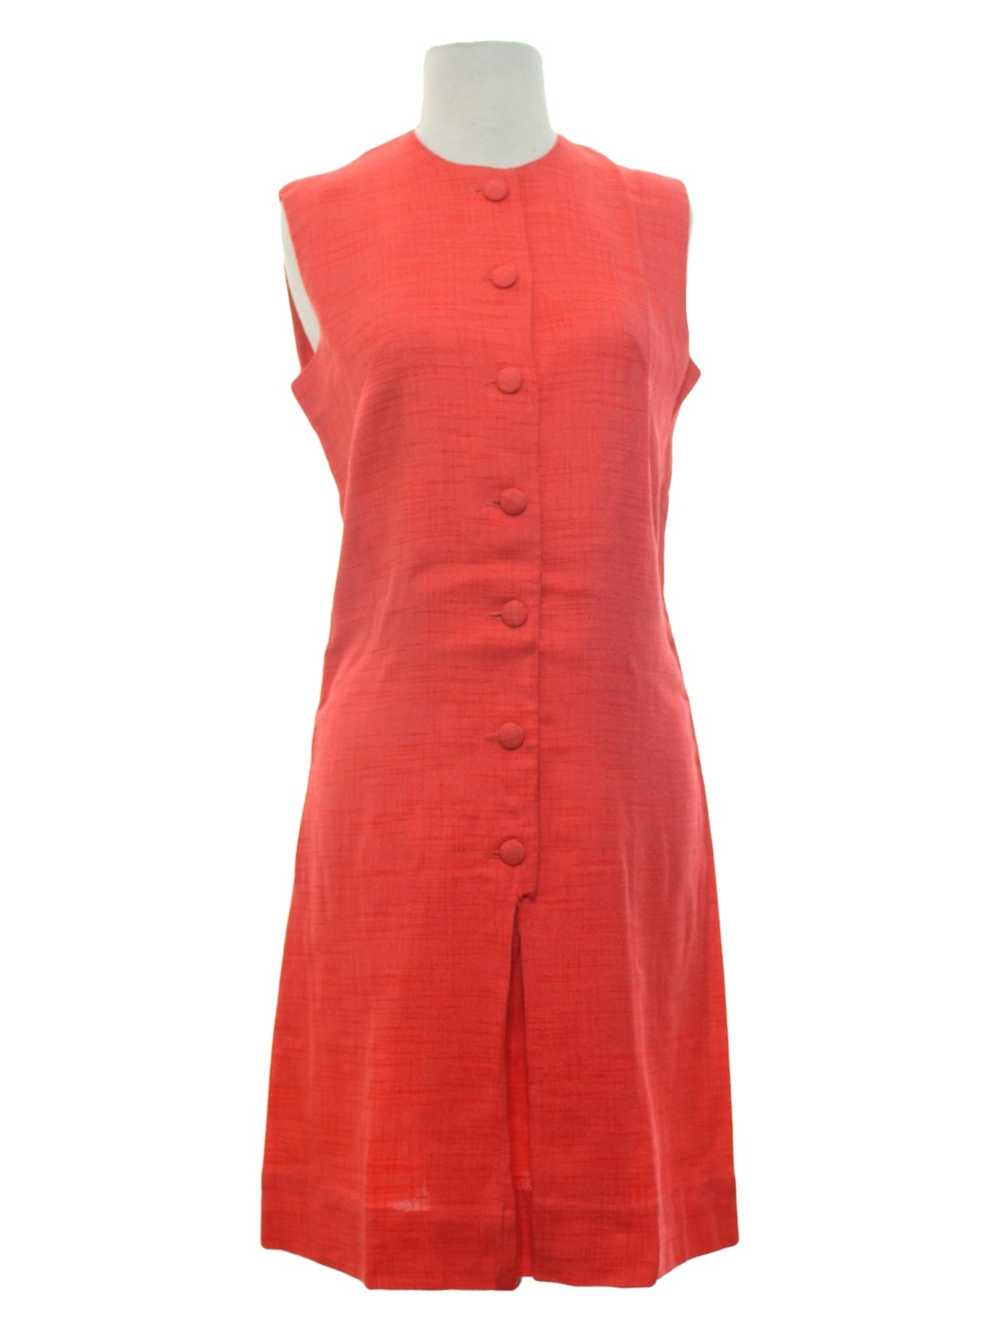 1960's Size Label Dress - image 1